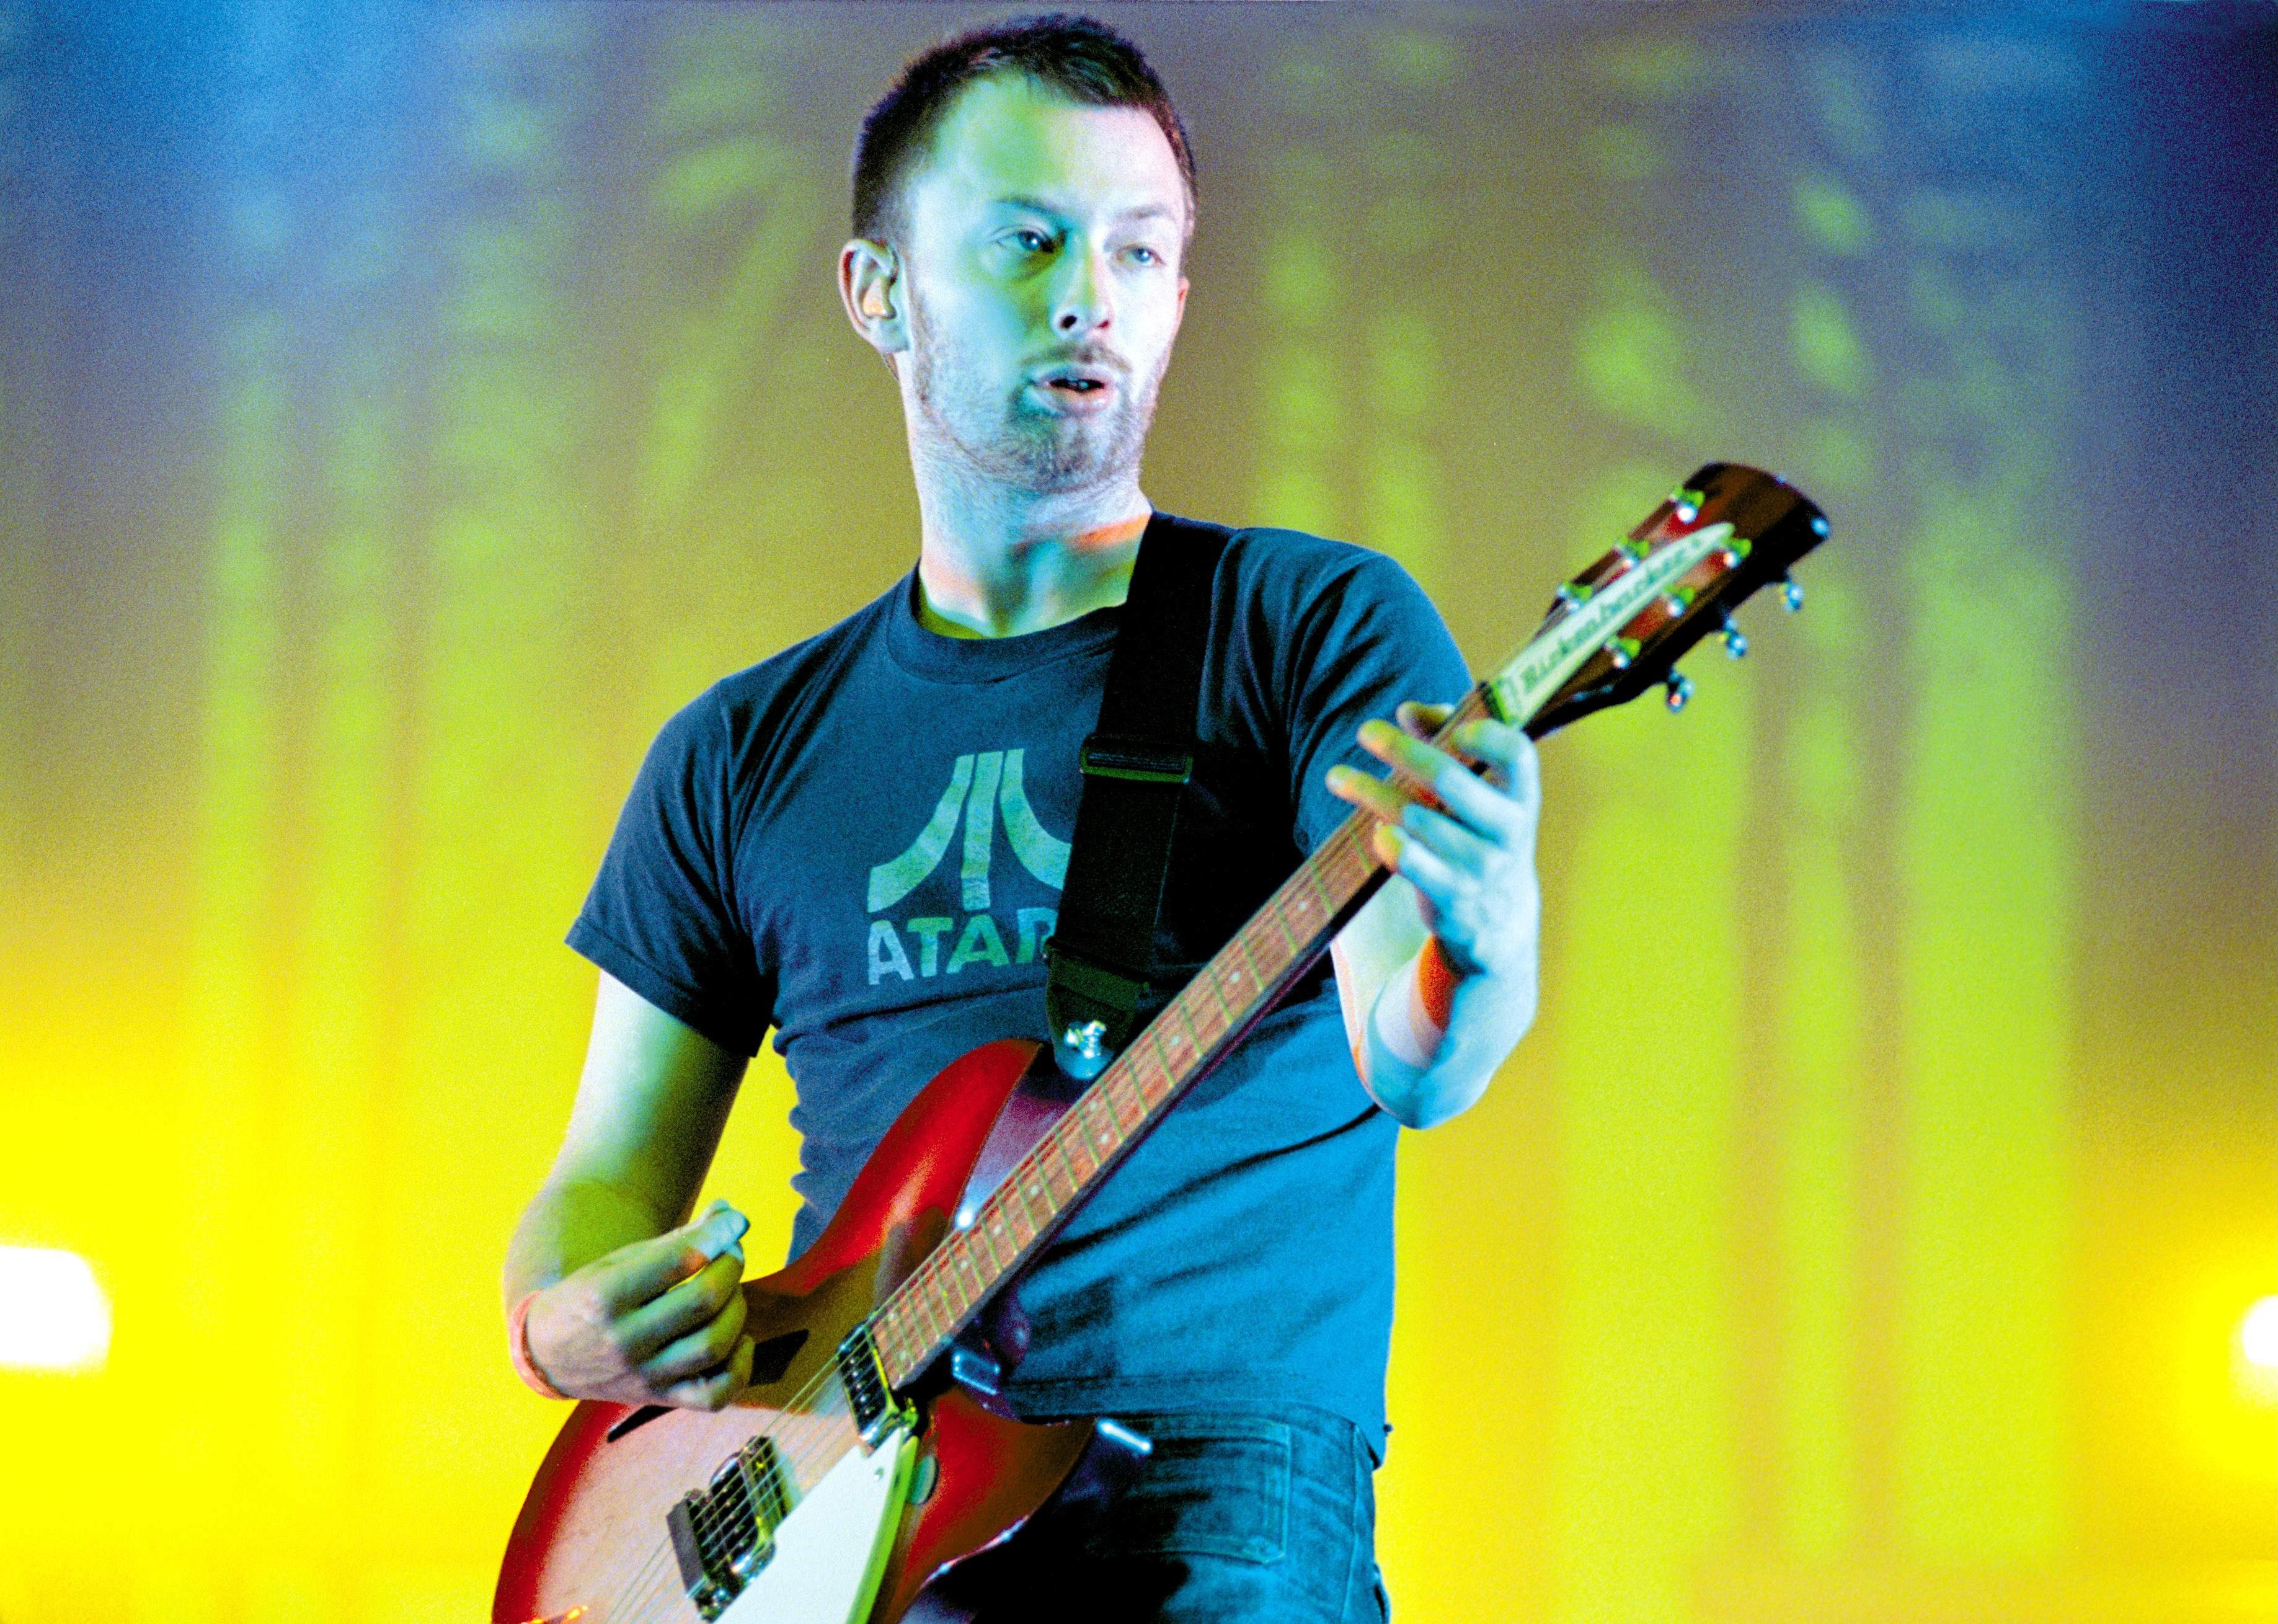 Thom Yorke of Radiohead plays a guitar